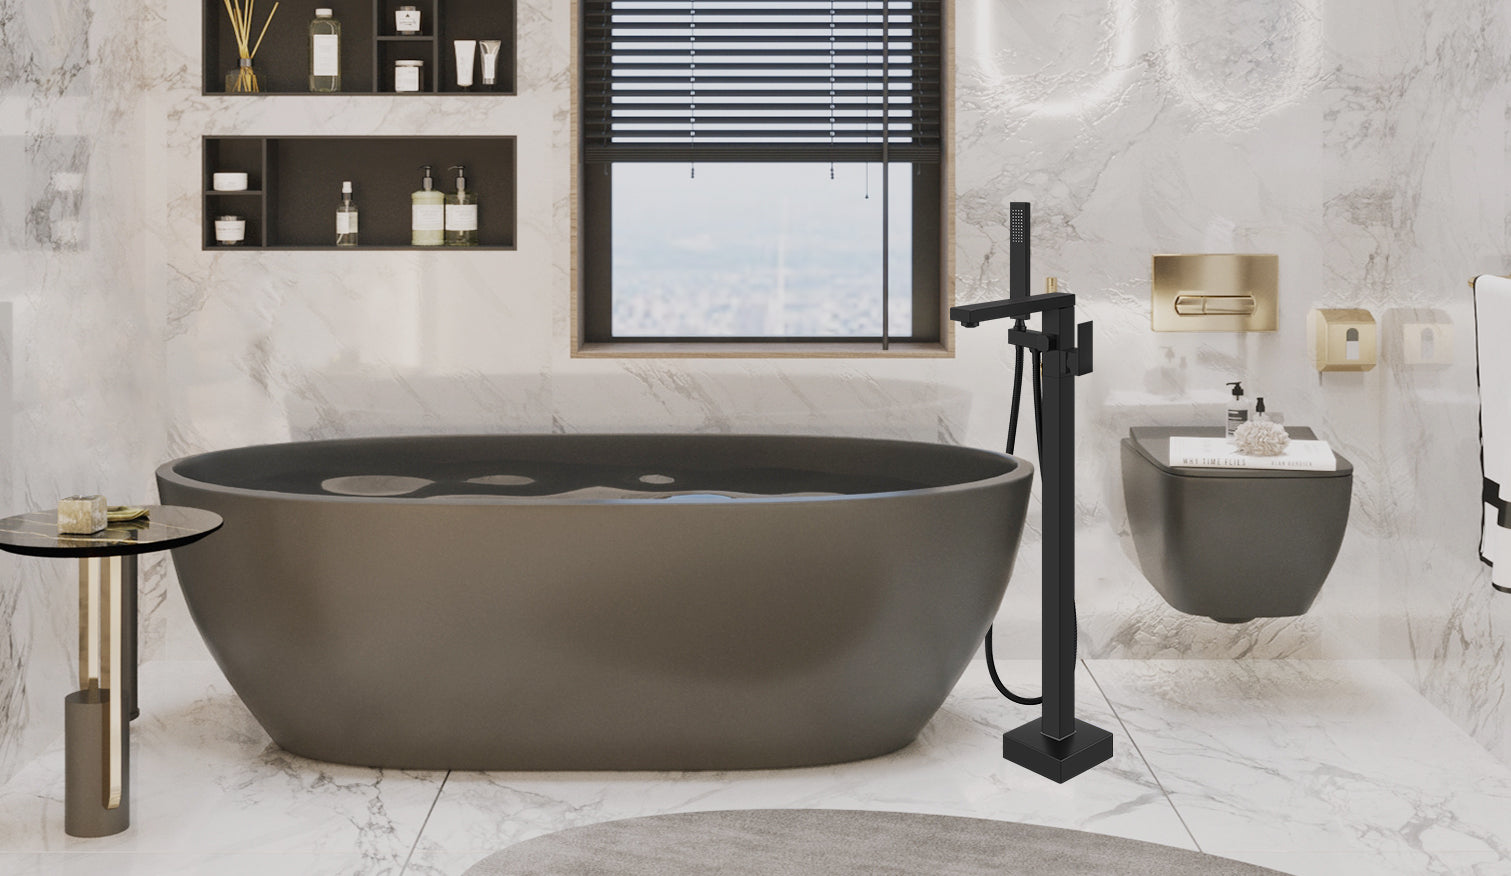 Freestanding Bathtub Faucet Floor Mount Tub Filler Single Handle Brass Tap with Hand Shower